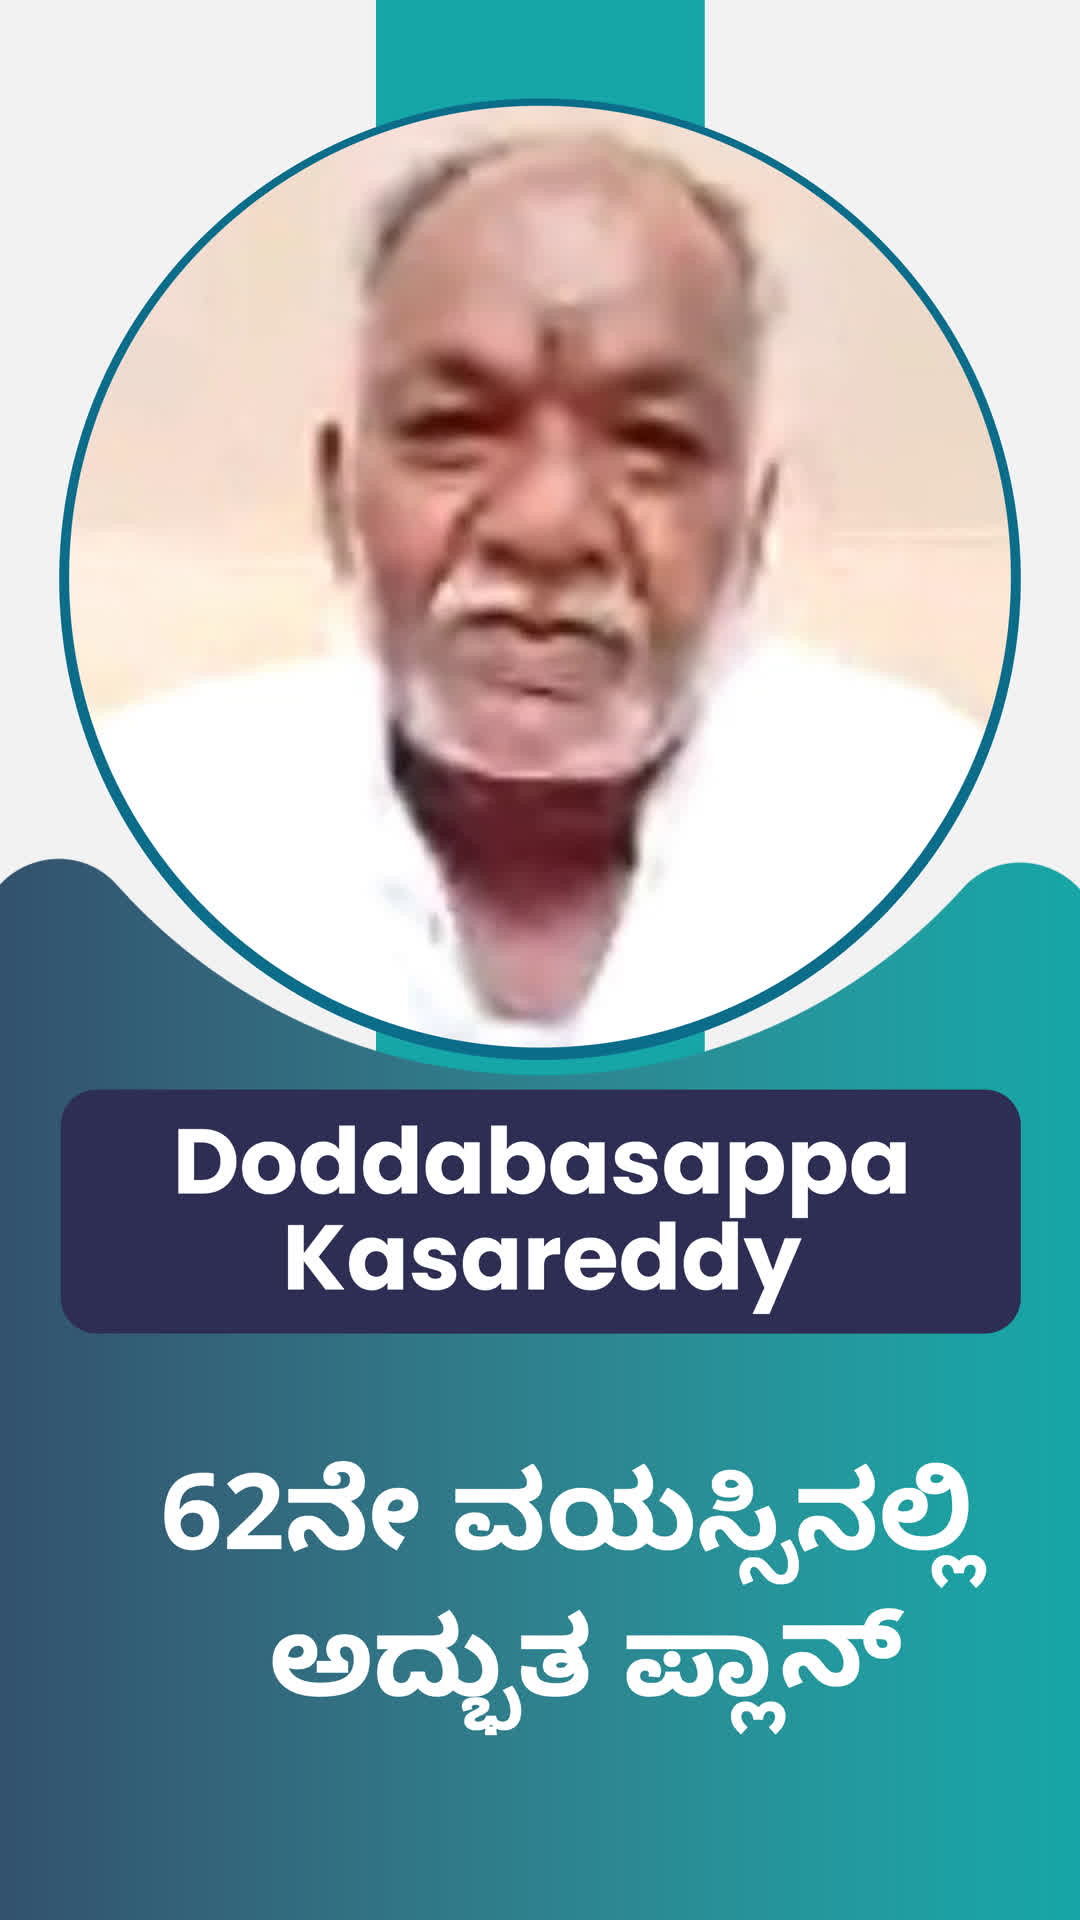 Doddabasappa Kasareddy's Honest Review of ffreedom app - Raichur ,Karnataka